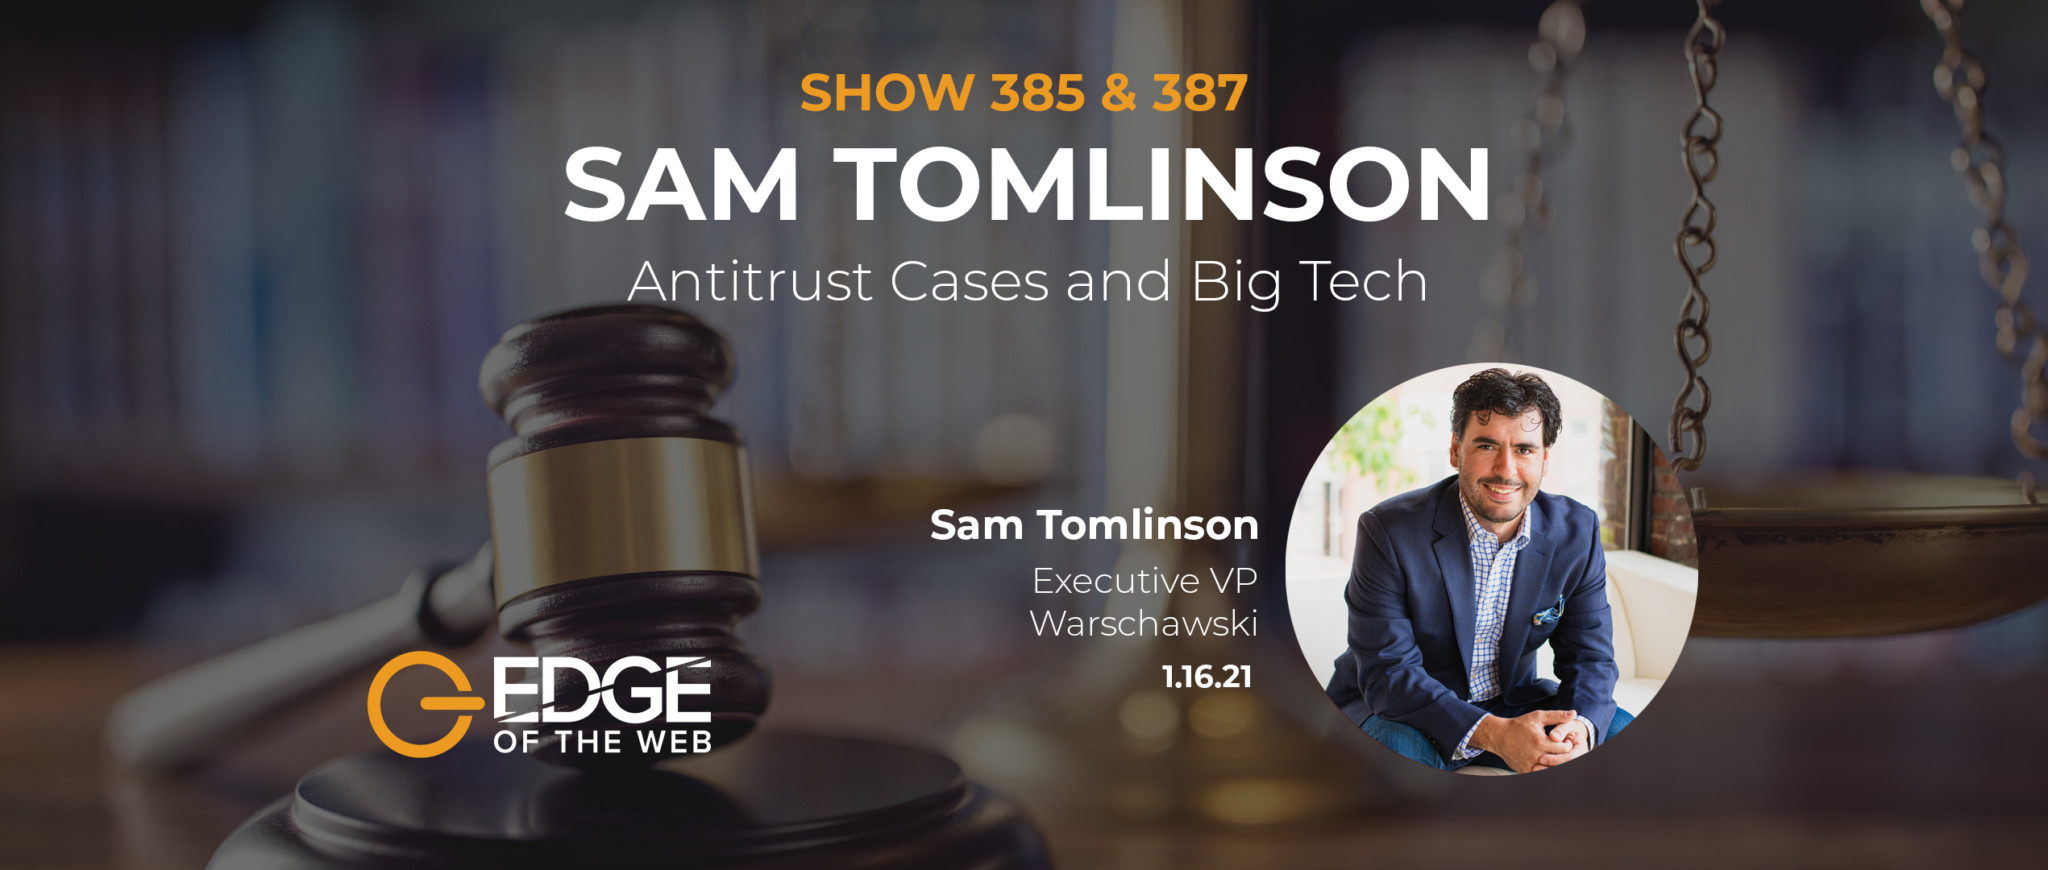 Sam Tomlinson and Big Tech Antitrust